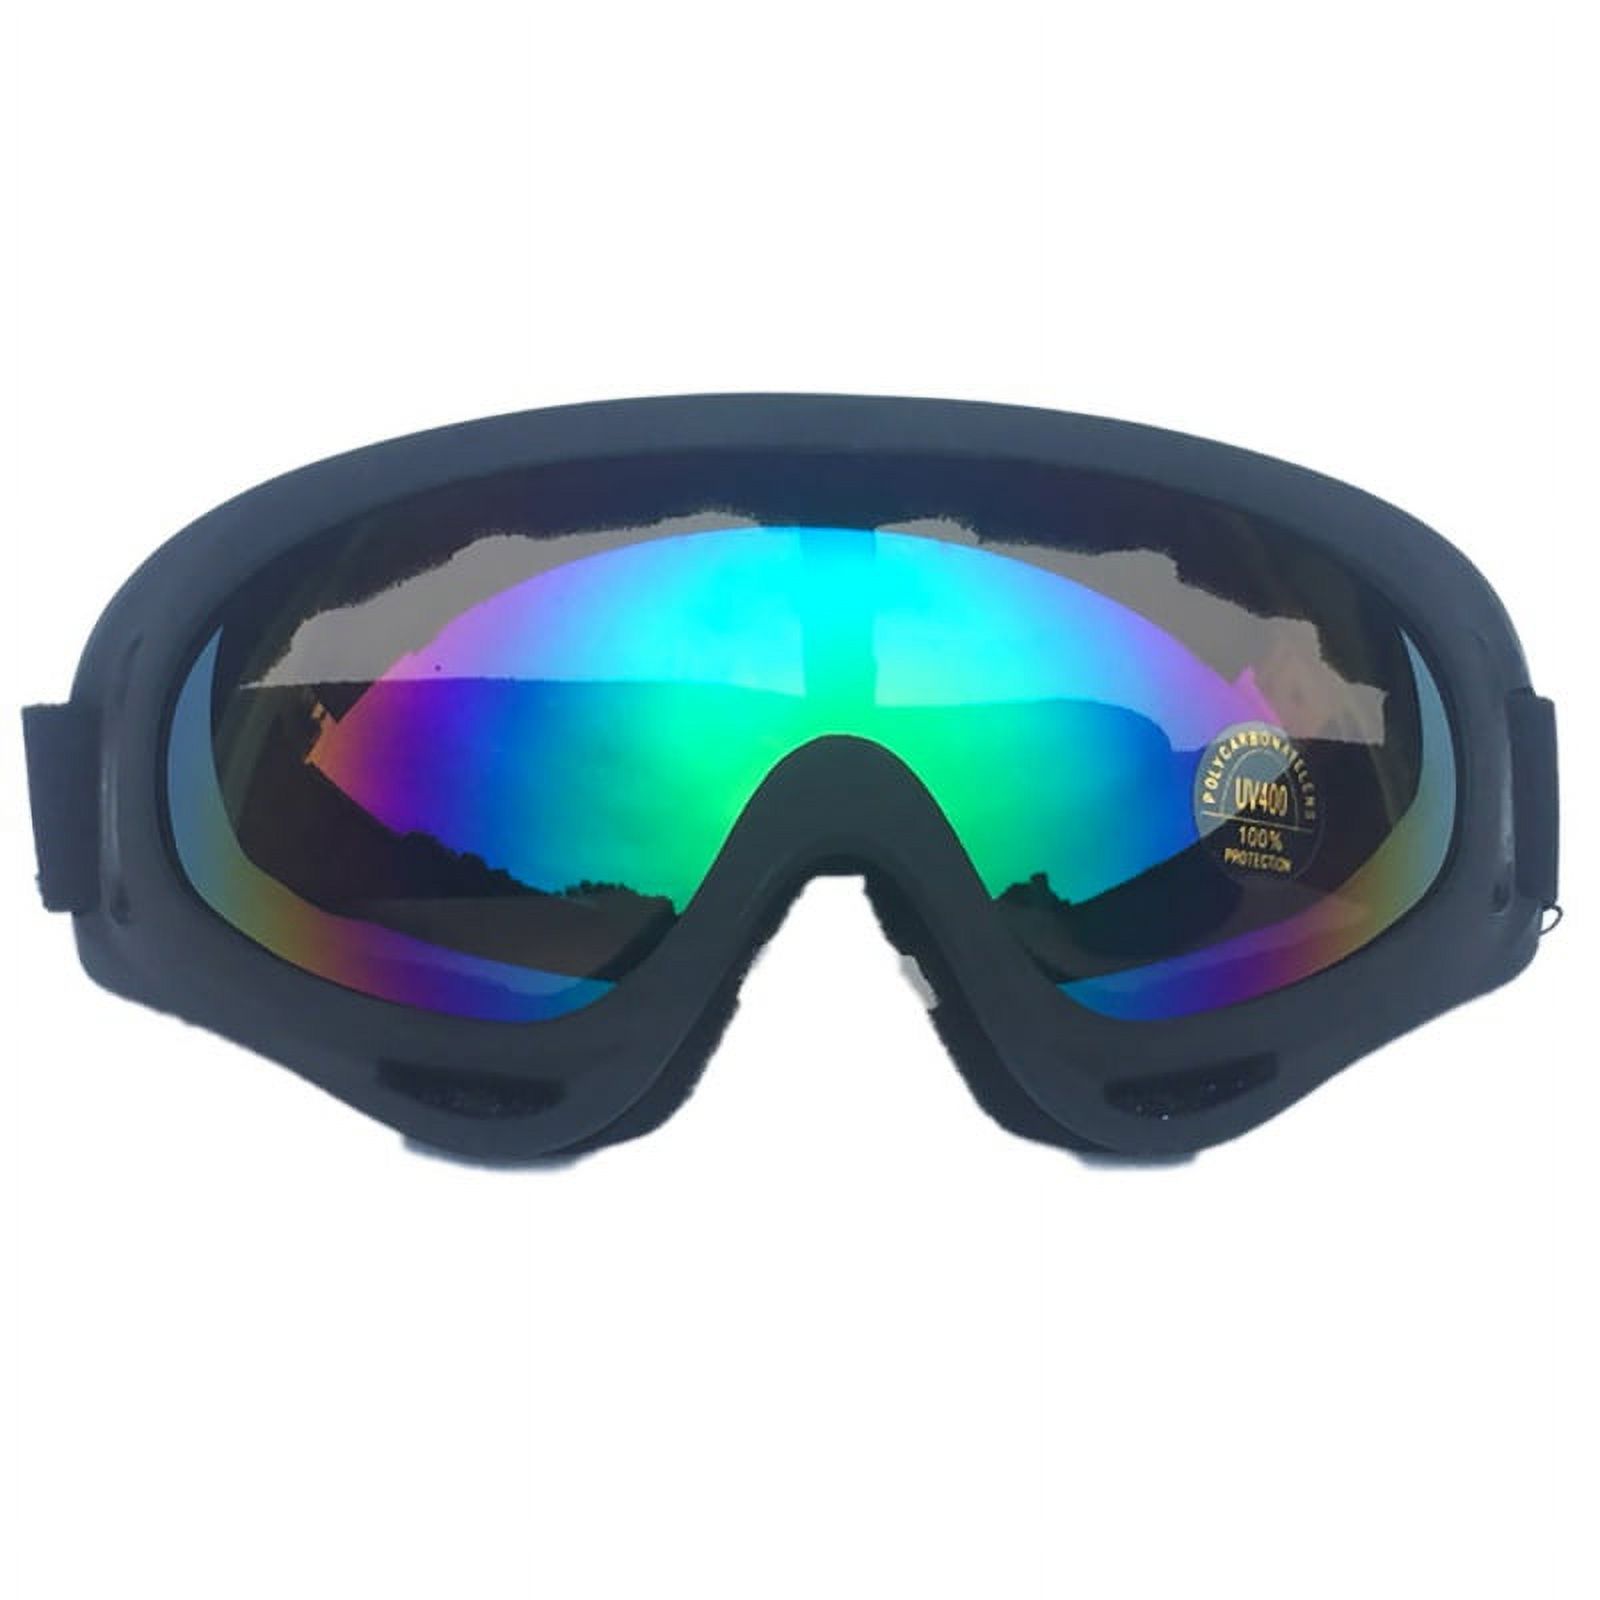 Skiing Goggles Women Men PC UV 400 Protective Lens Windproof Dust-proof Adjustable Sports Glasses Eyewear Motorcycle Jet Ski Sport Snowboard Goggles Sunglass - image 1 of 4